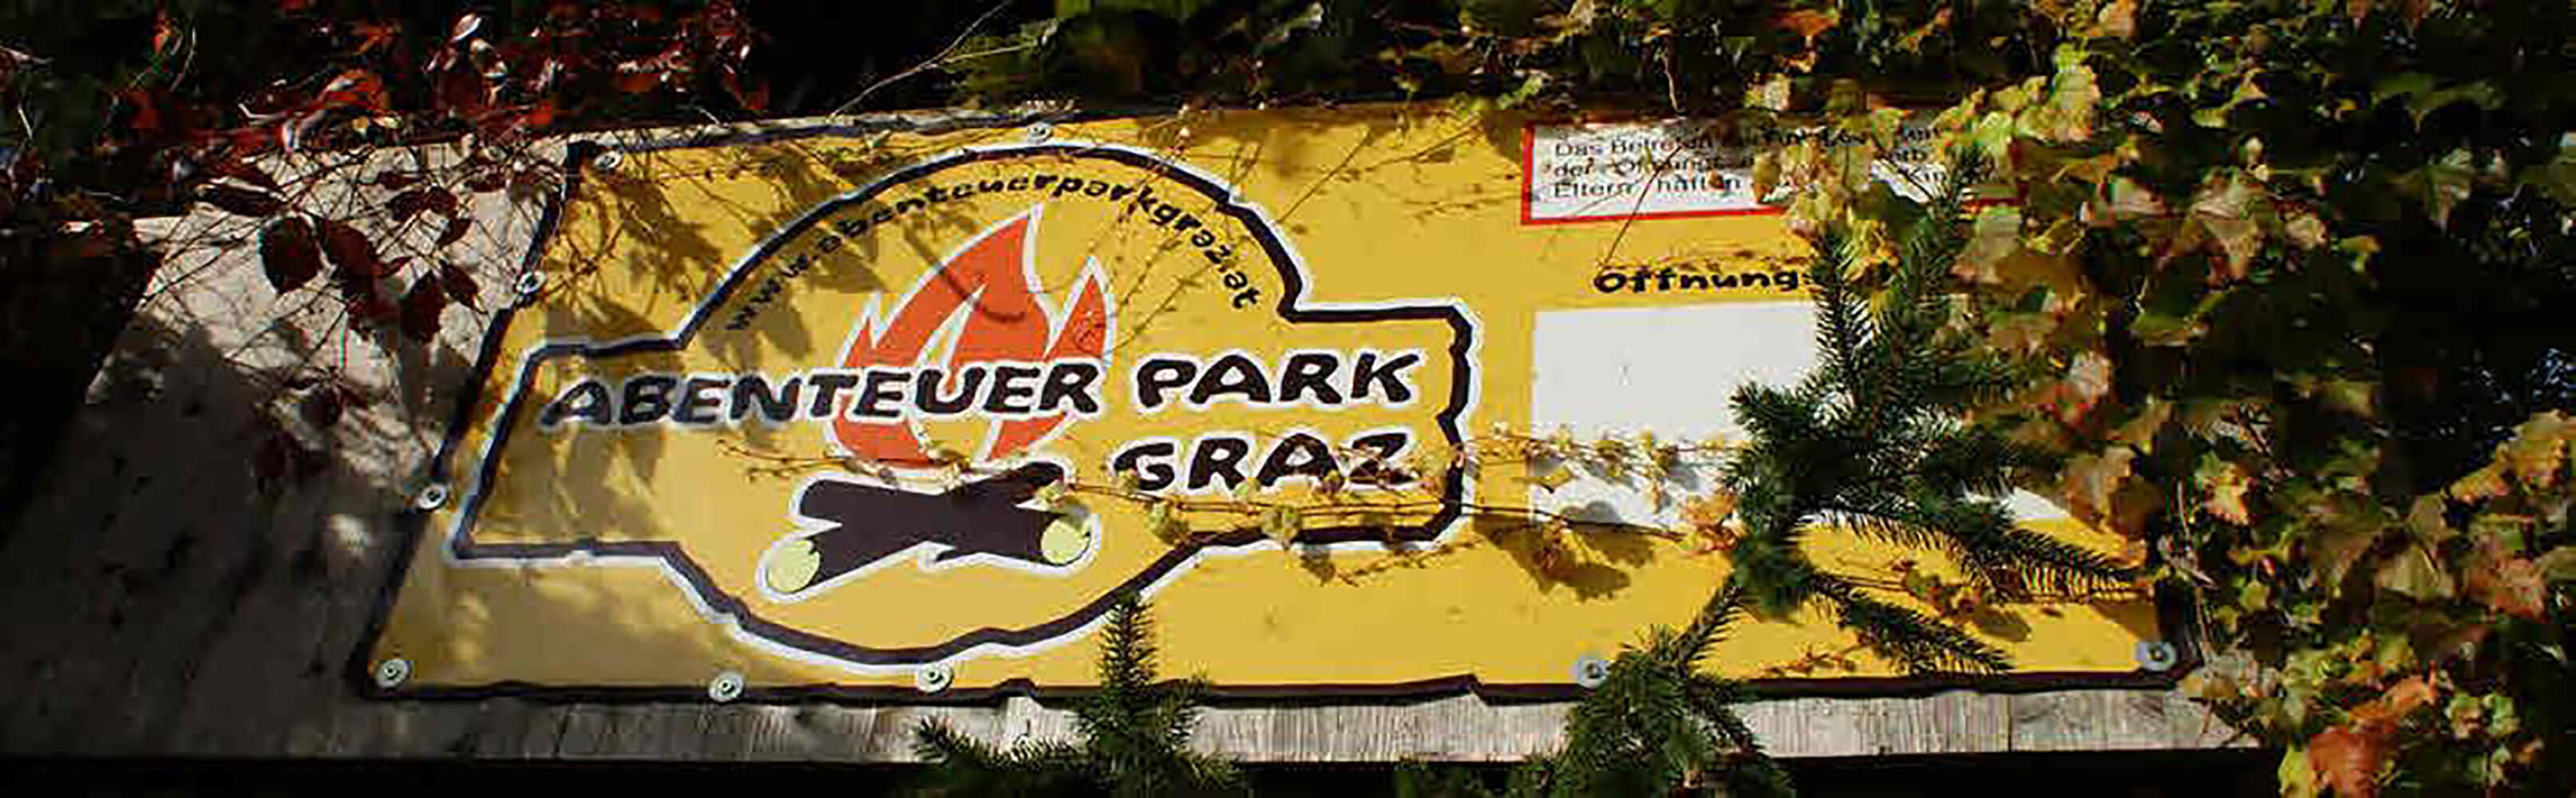 Abenteuer Park Graz  1